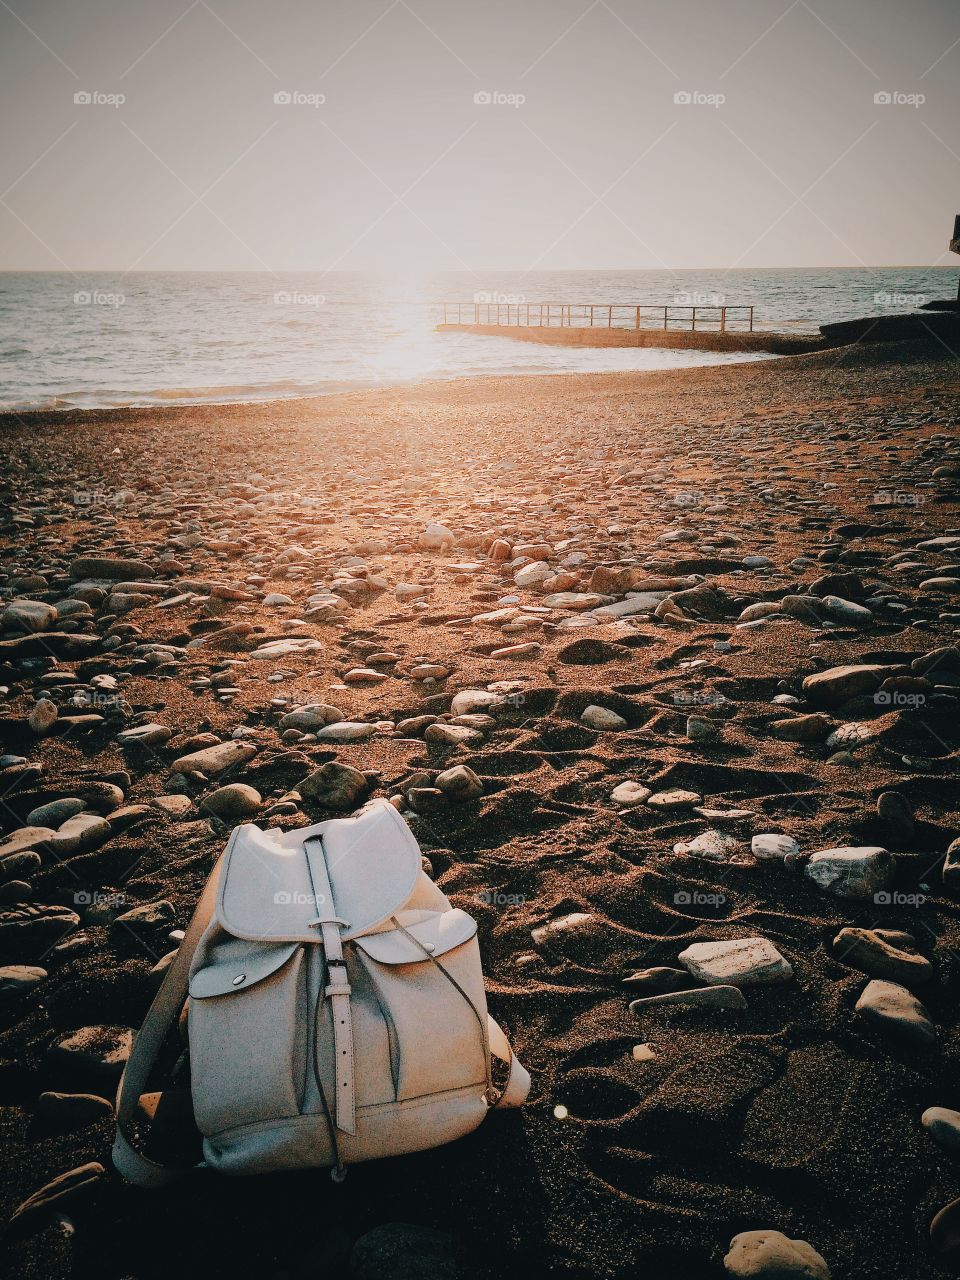 Sunset beach with stones and white rucksack.